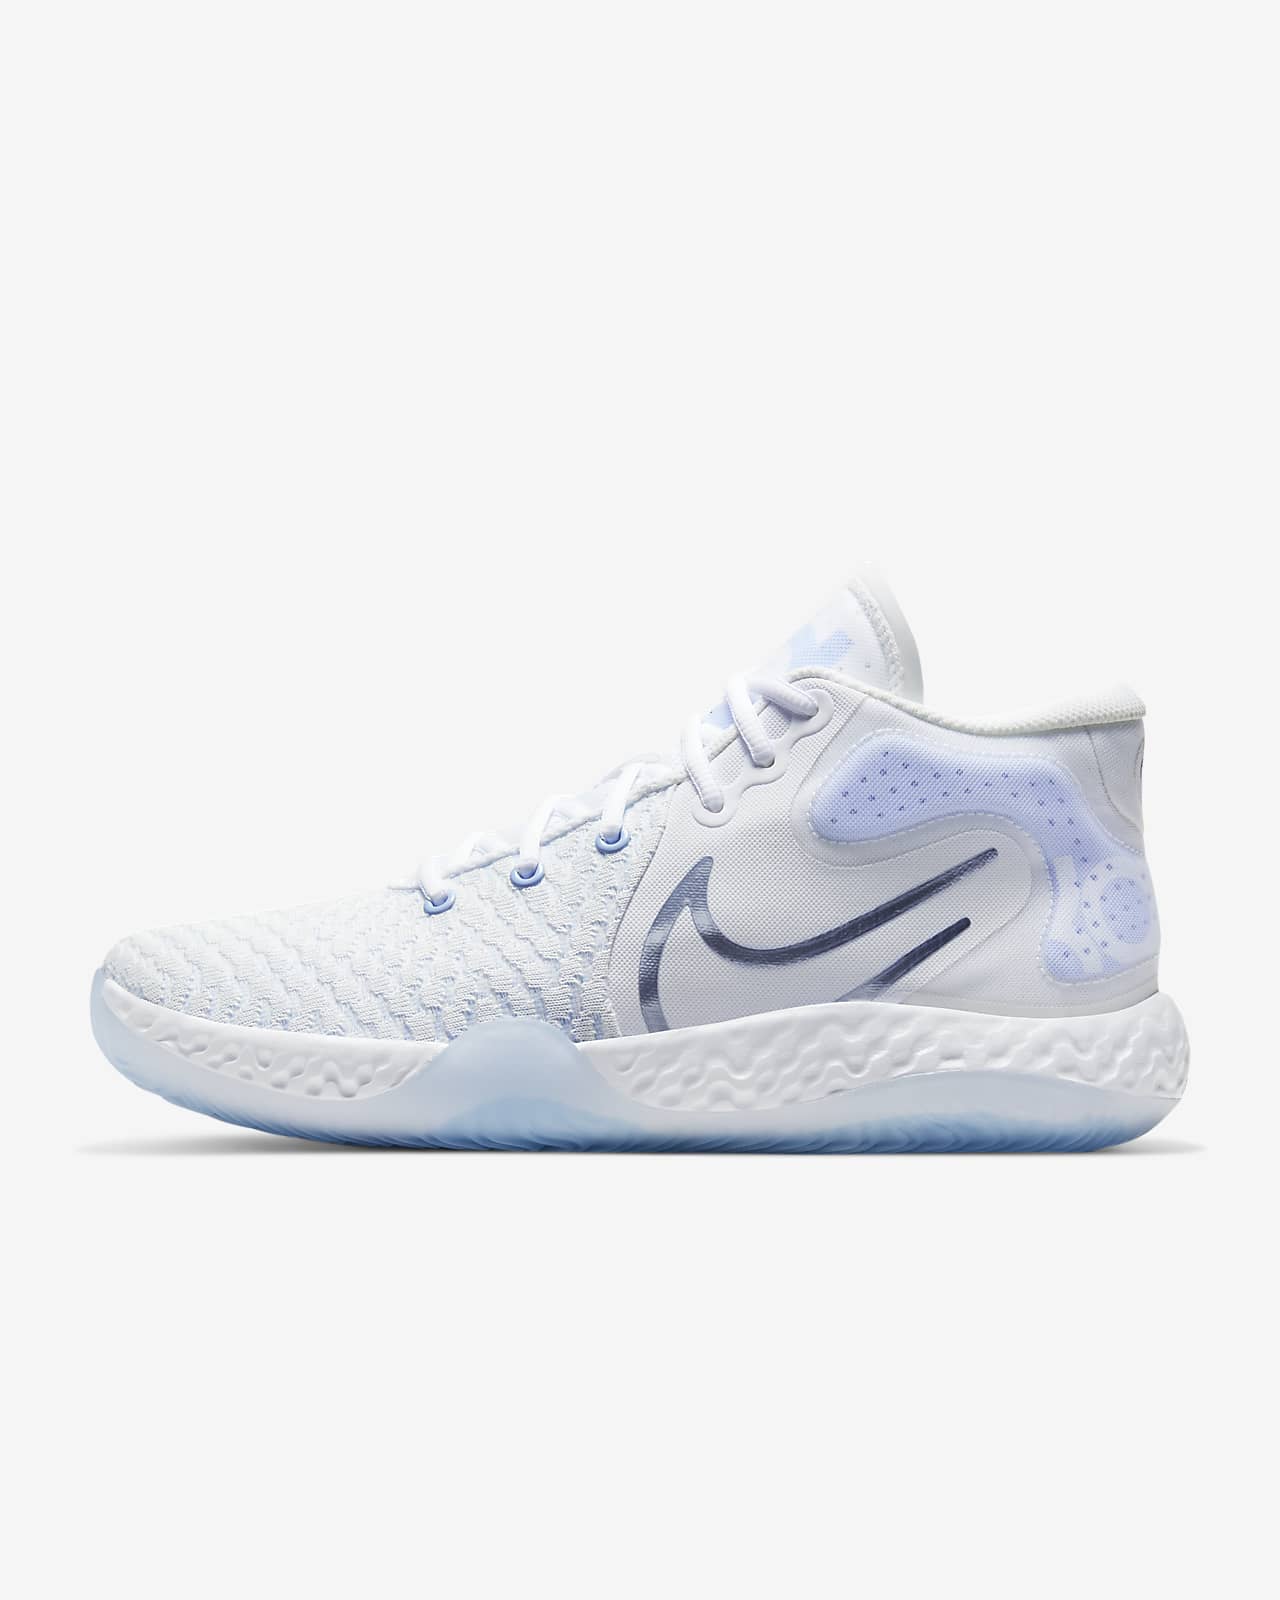 Nike KD Trey 5 VIII Men's Basketball Shoes, Size: 10.5, White